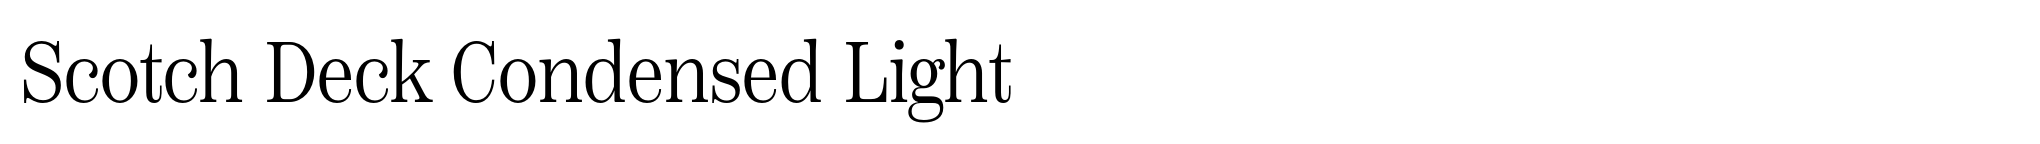 Scotch Deck Condensed Light image